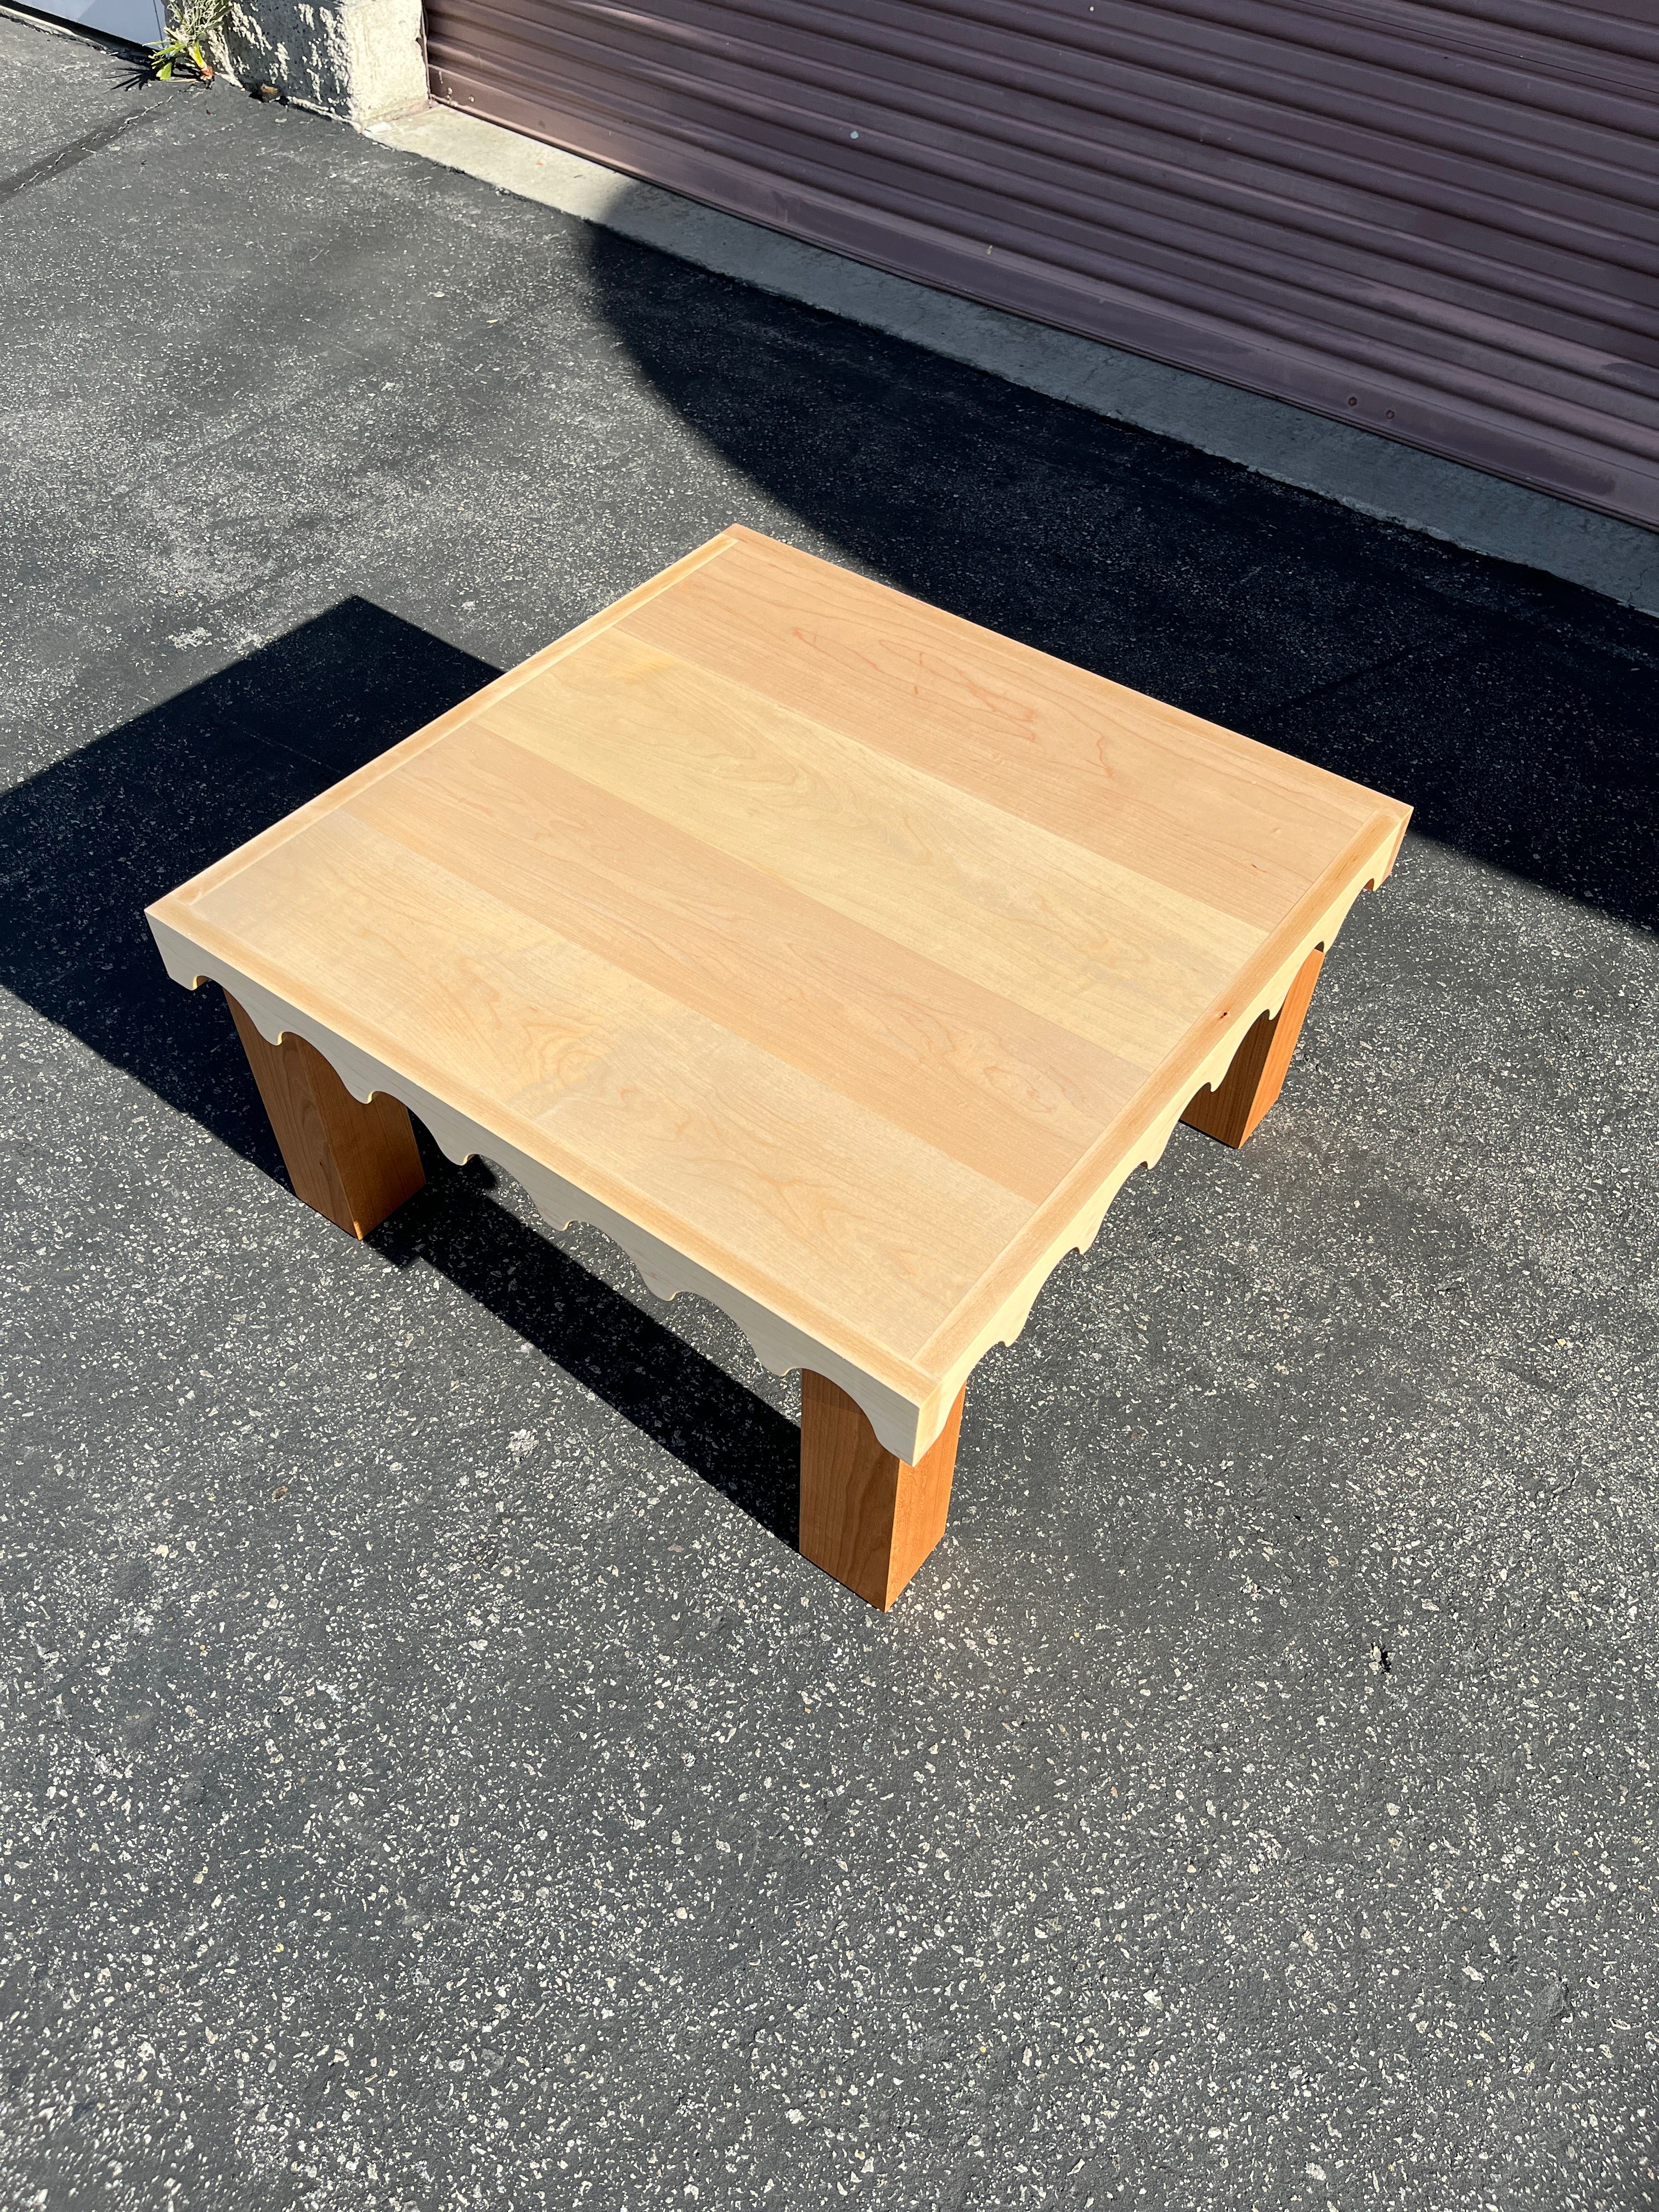  Scallop Tables - Laun Studio product image 8